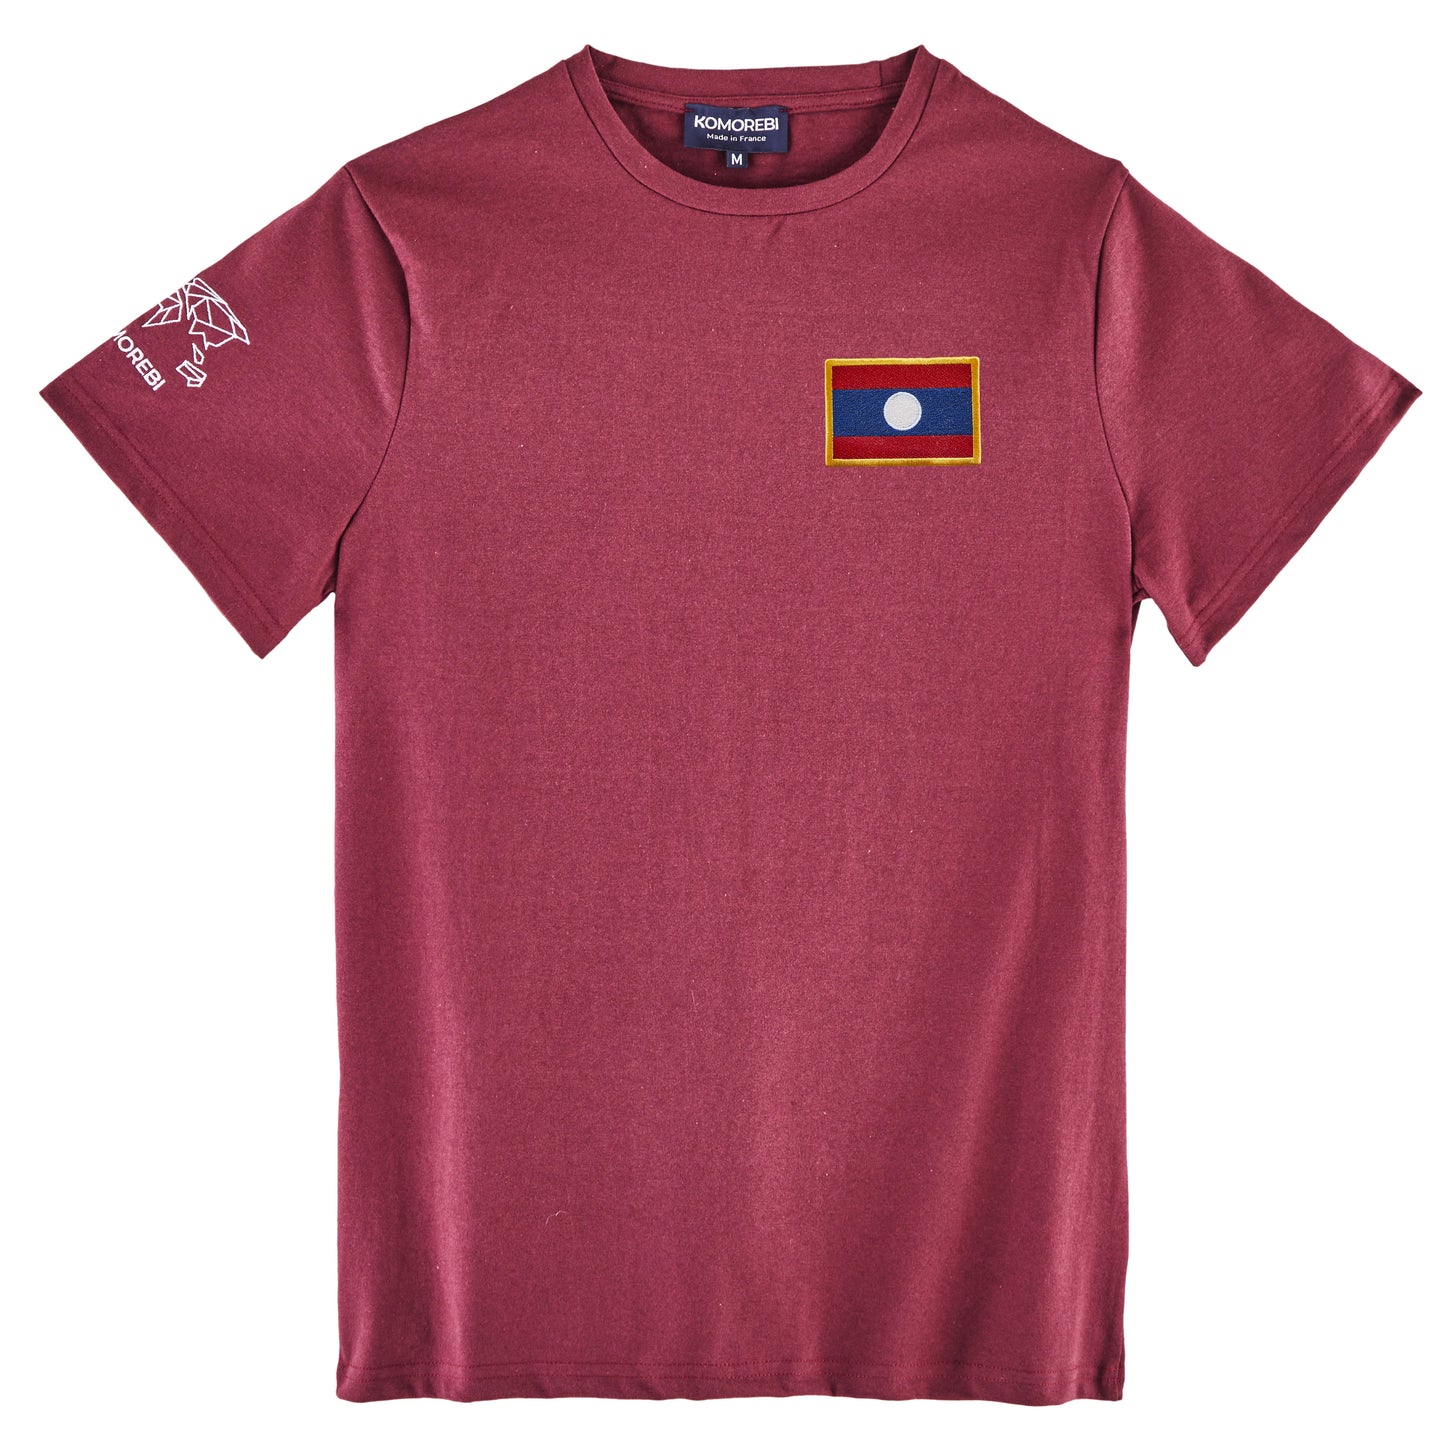 Laos - flag t-shirt